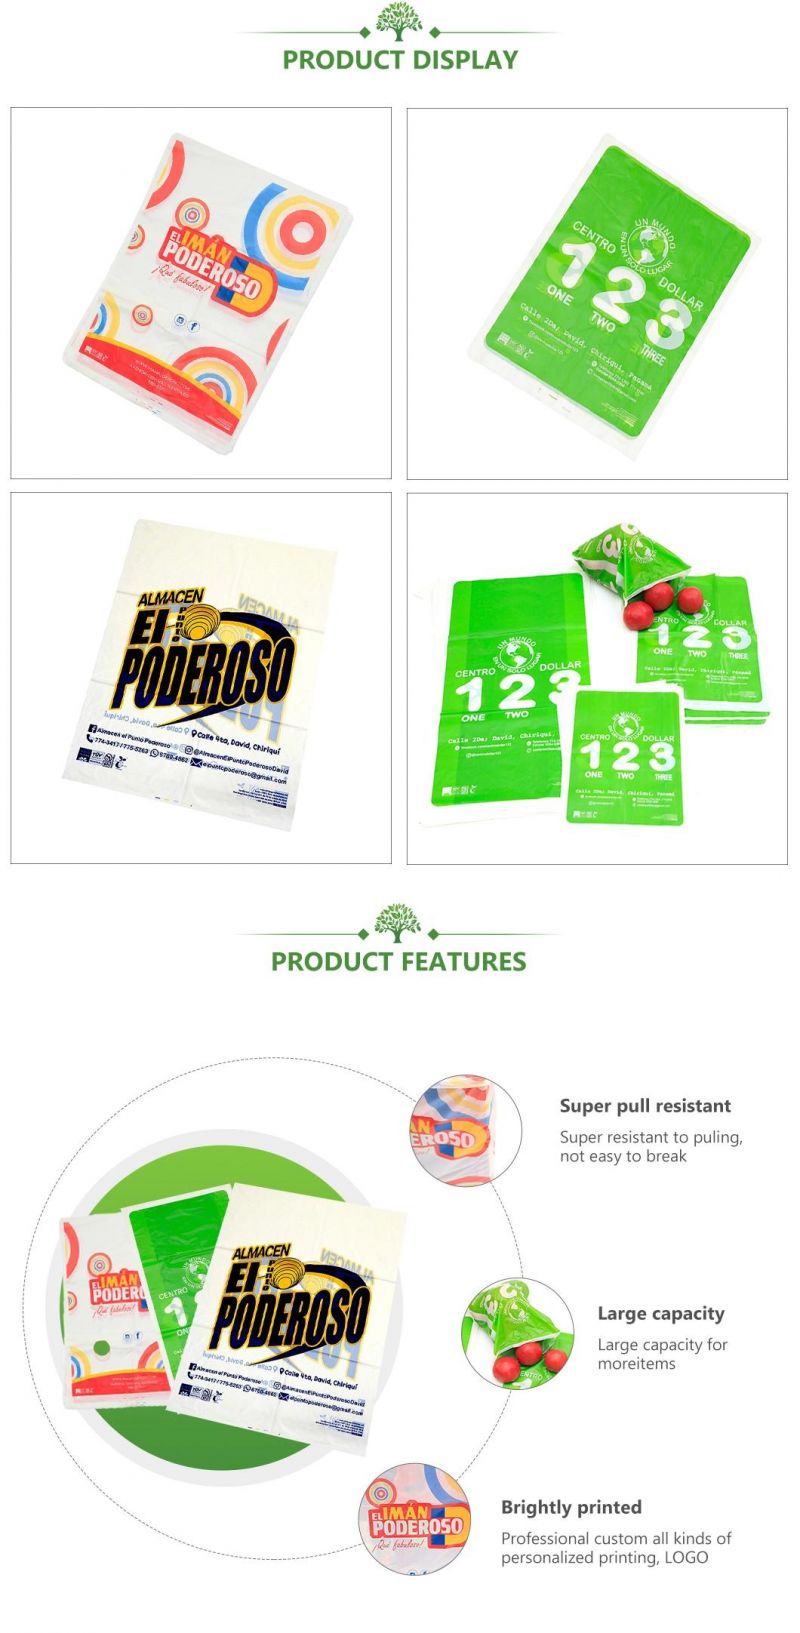 PLA+Pbat/Pbat+Corn Starch Biodegradable Bags, Compostable Bags, Flat Bags for Restaurant